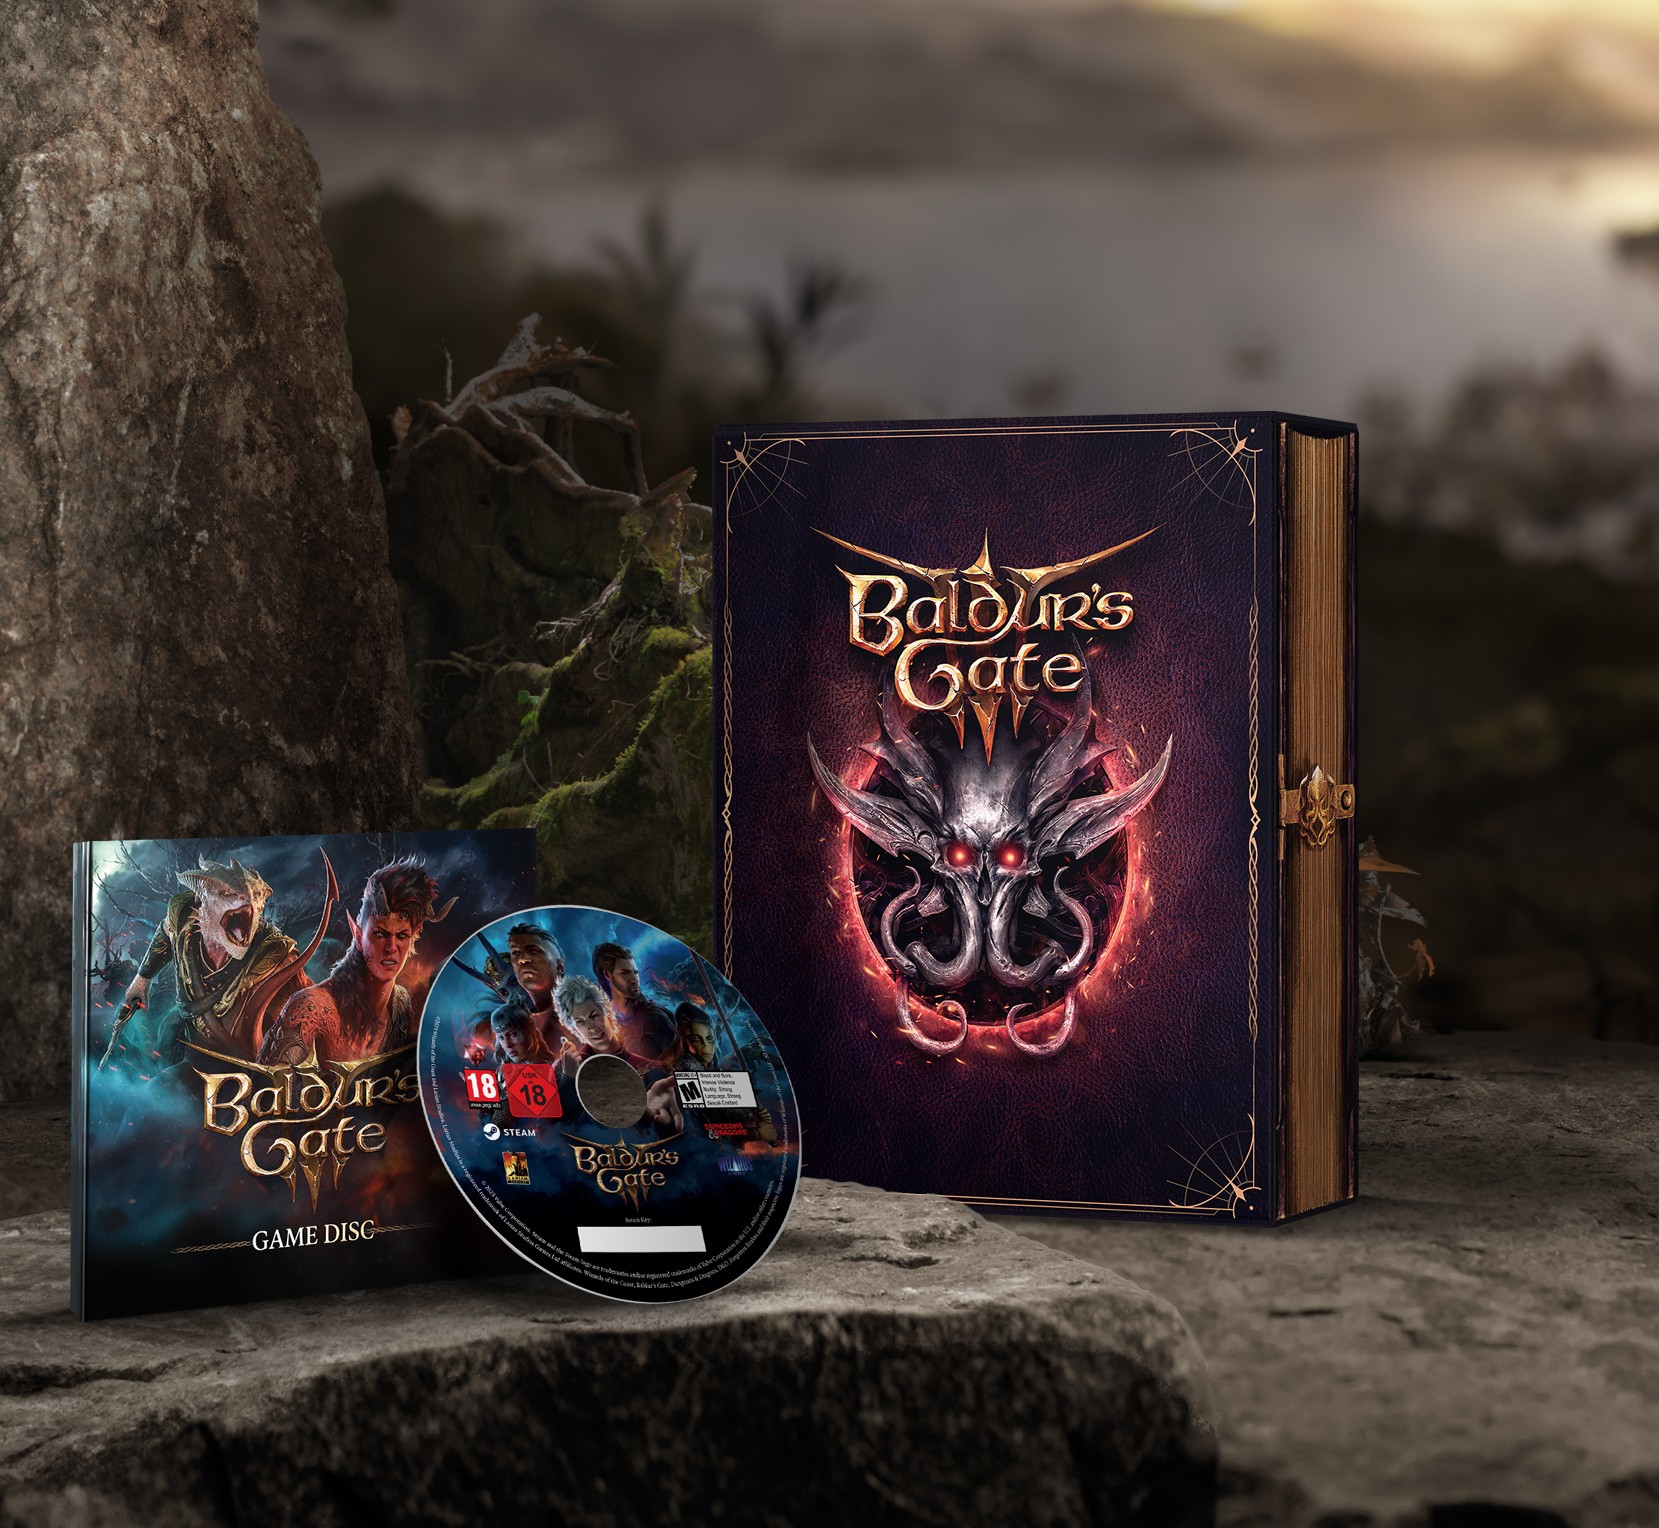 Larian Merch Store- Baldur's Gate 3 - Deluxe Edition PC